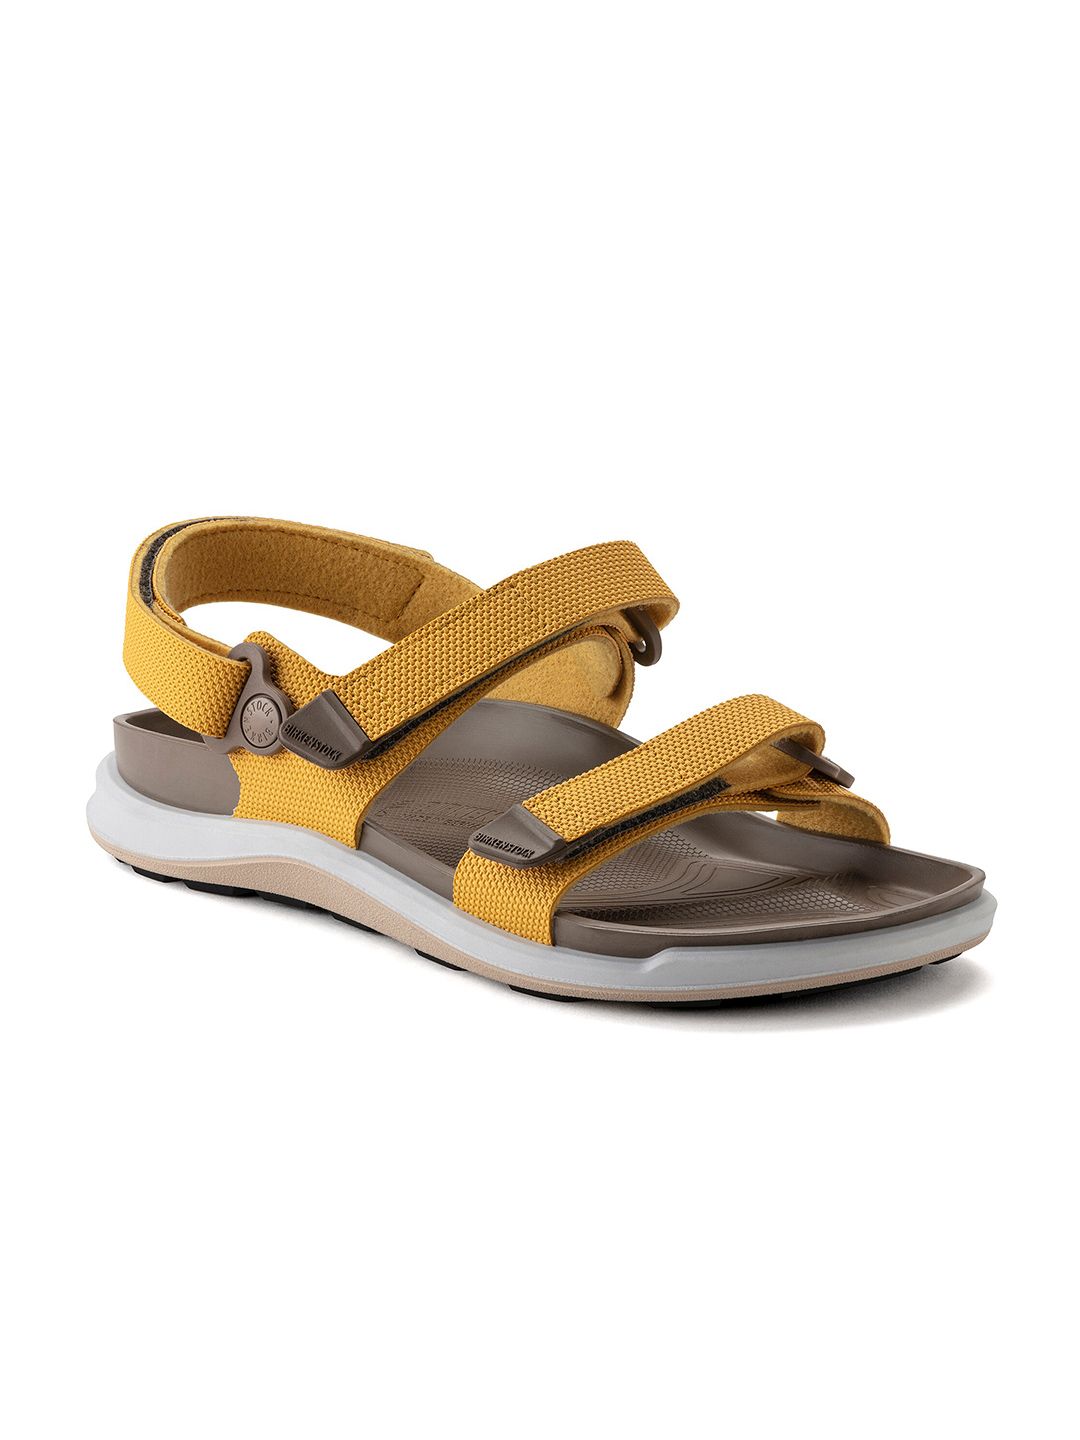 Birkenstock Women Mustard Yellow & Brown PU Kalahari Comfort Sandals Price in India